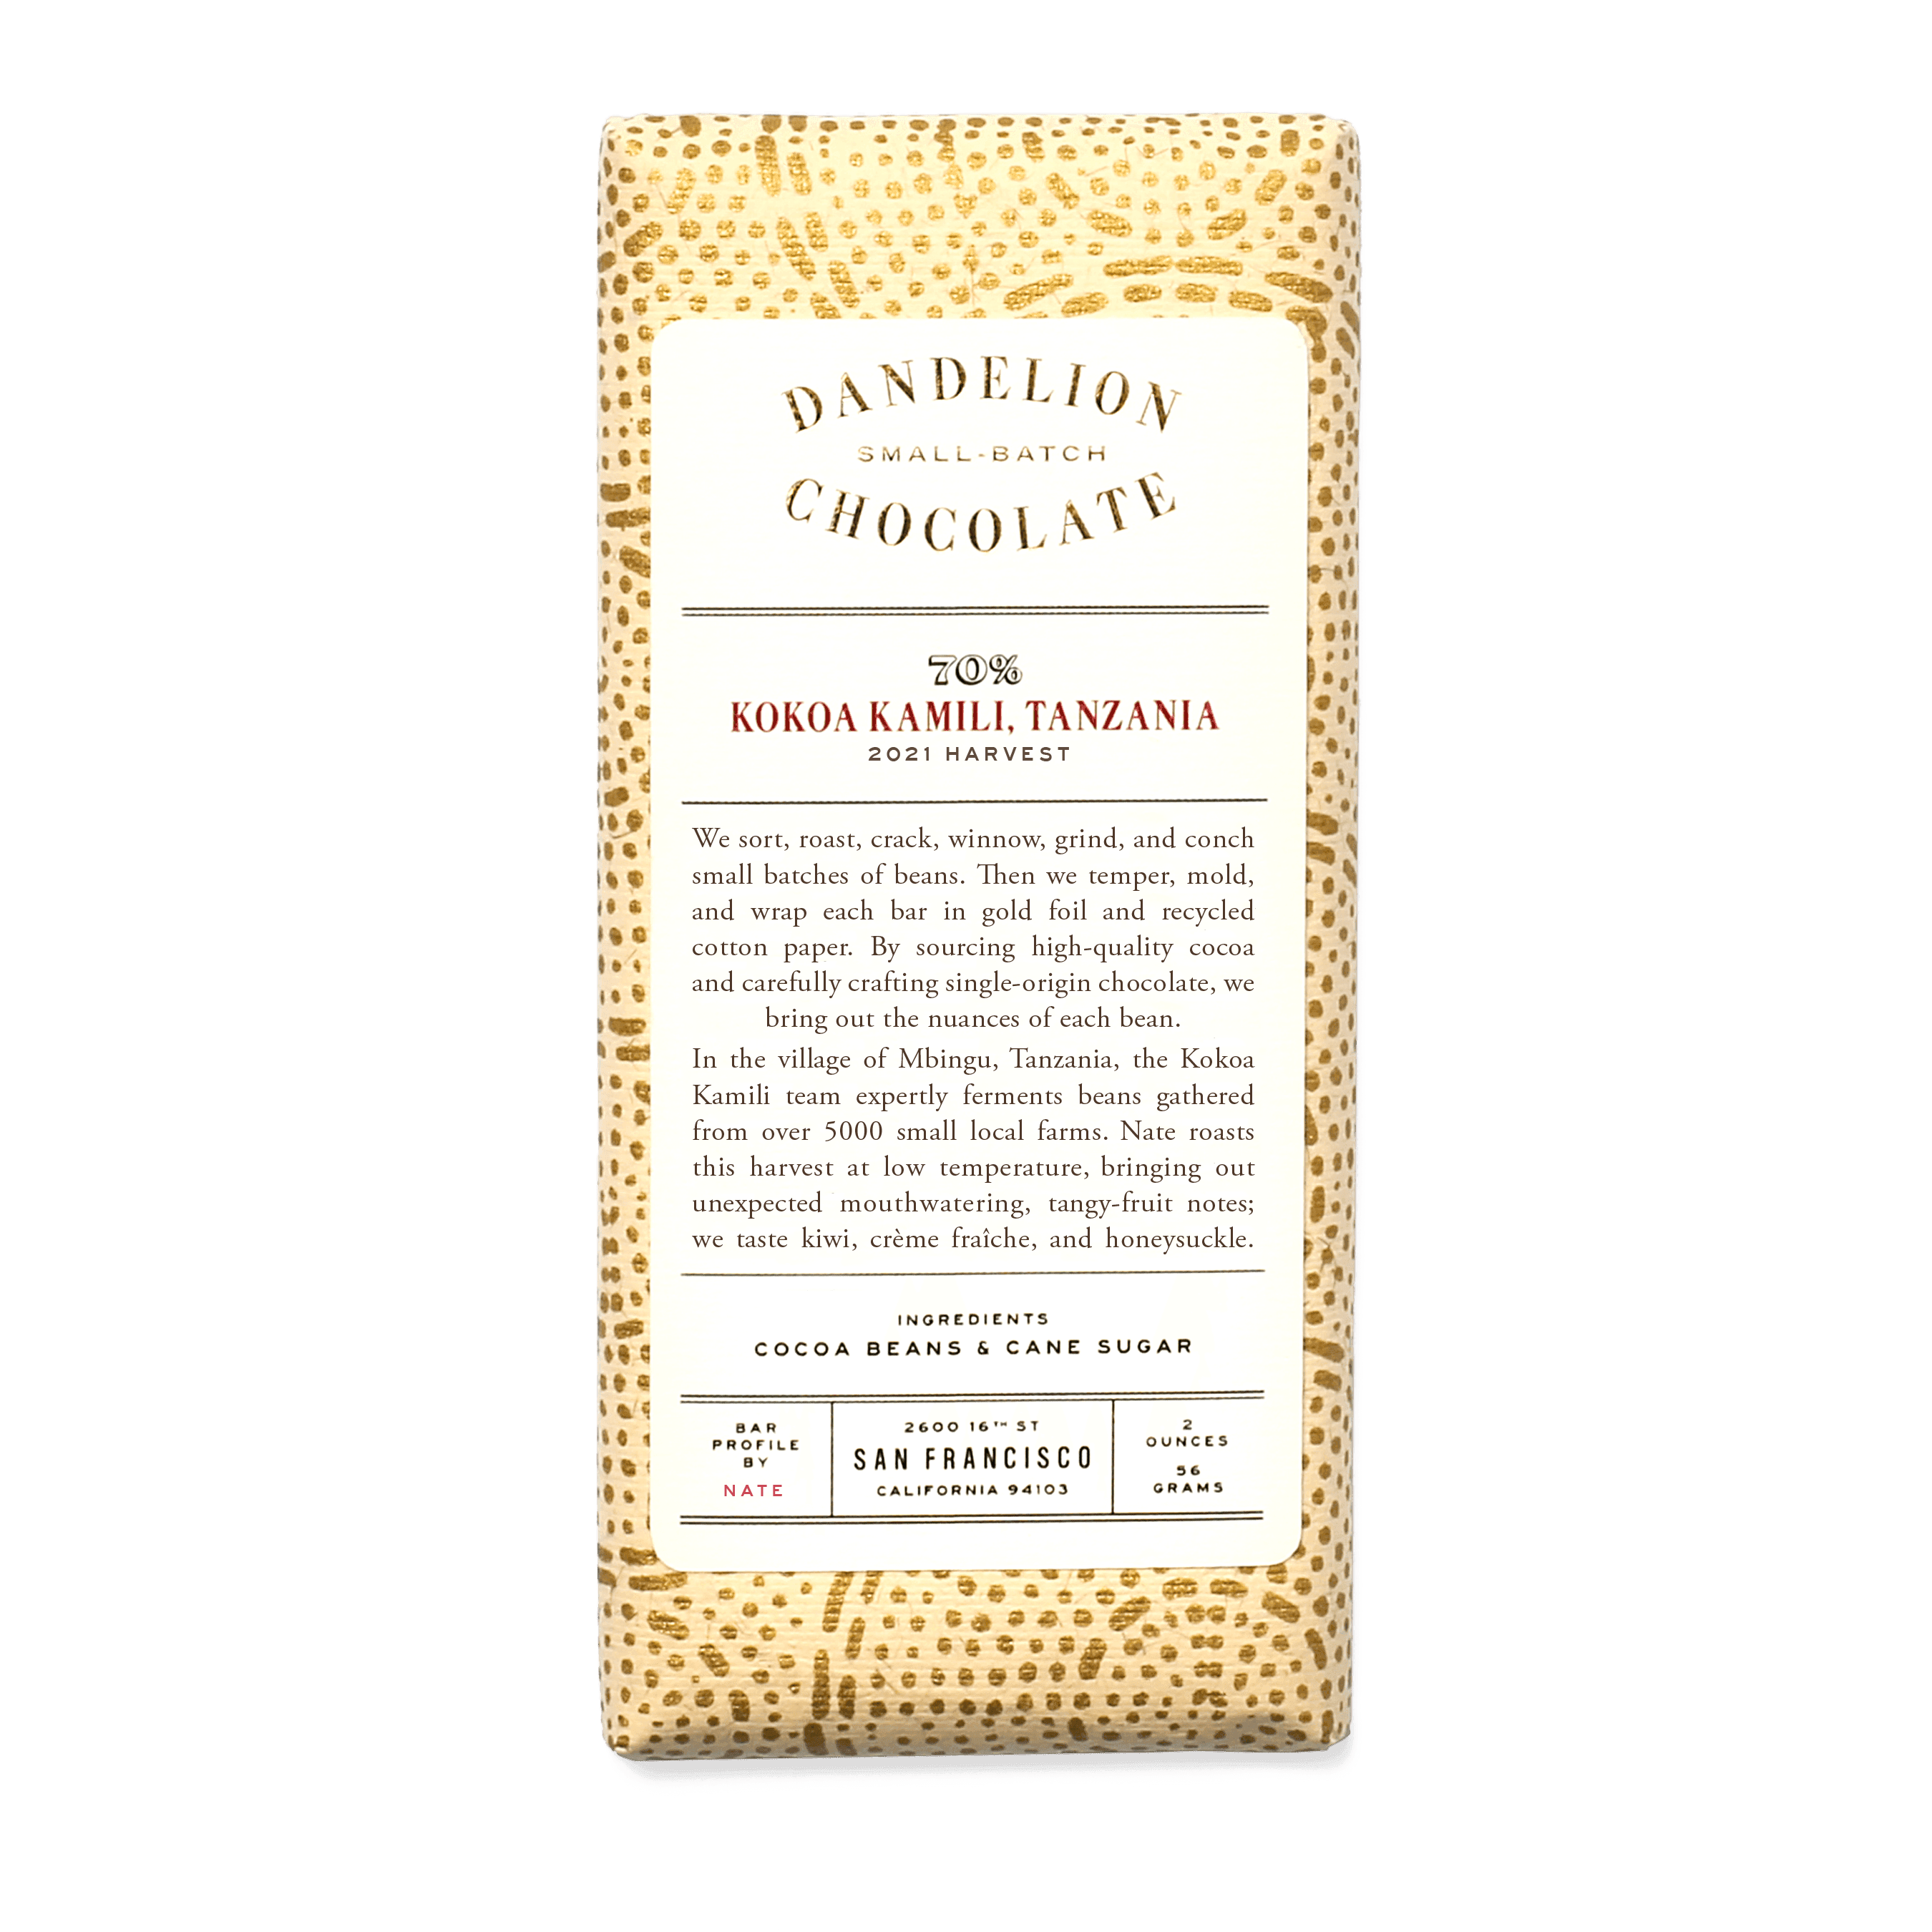 Dandelion Chocolate Chocolate Bar Kokoa Kamili, Tanzania 70% 2021 Harvest Single-Origin Chocolate Bar